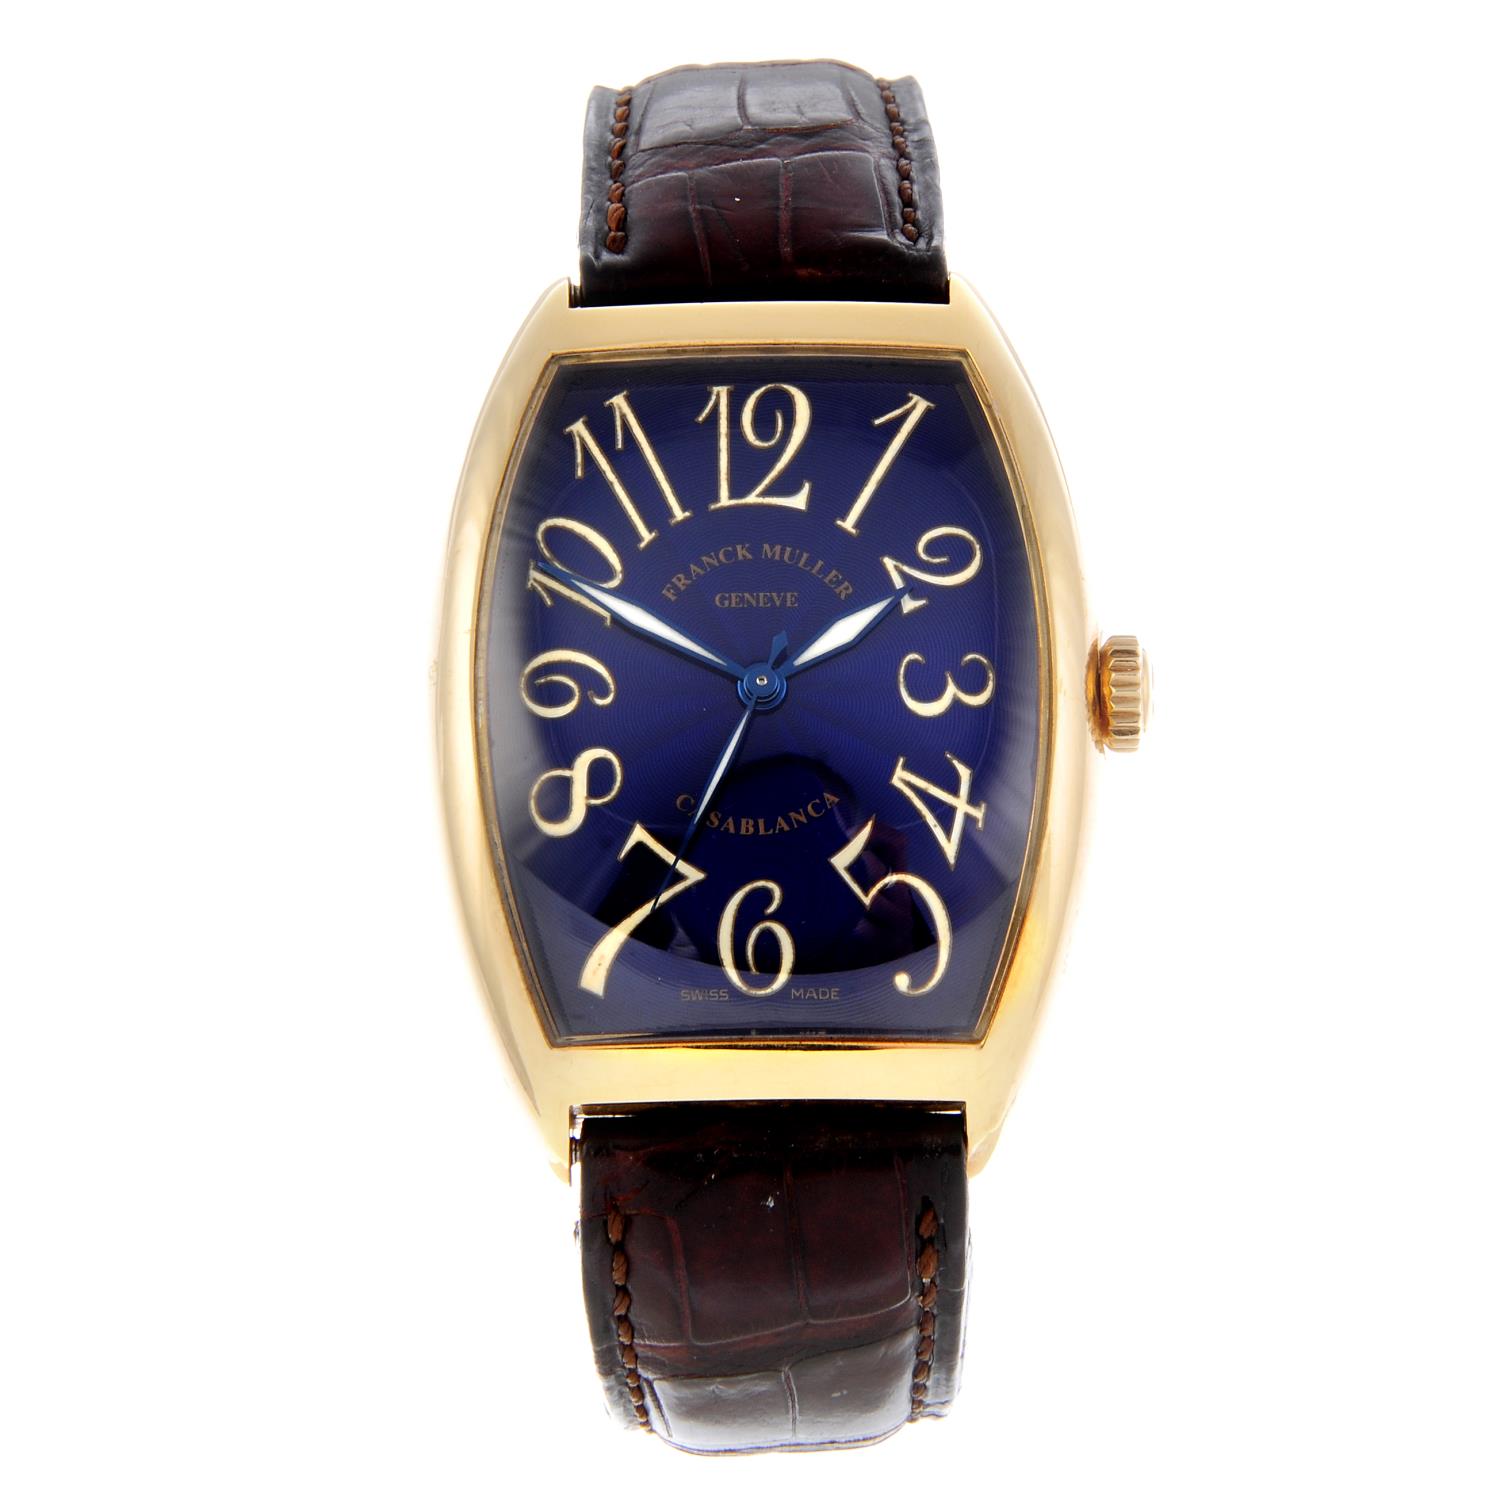 FRANCK MULLER - a gentleman's Casablanca wrist watch. 18ct yellow gold case. Reference 6850,